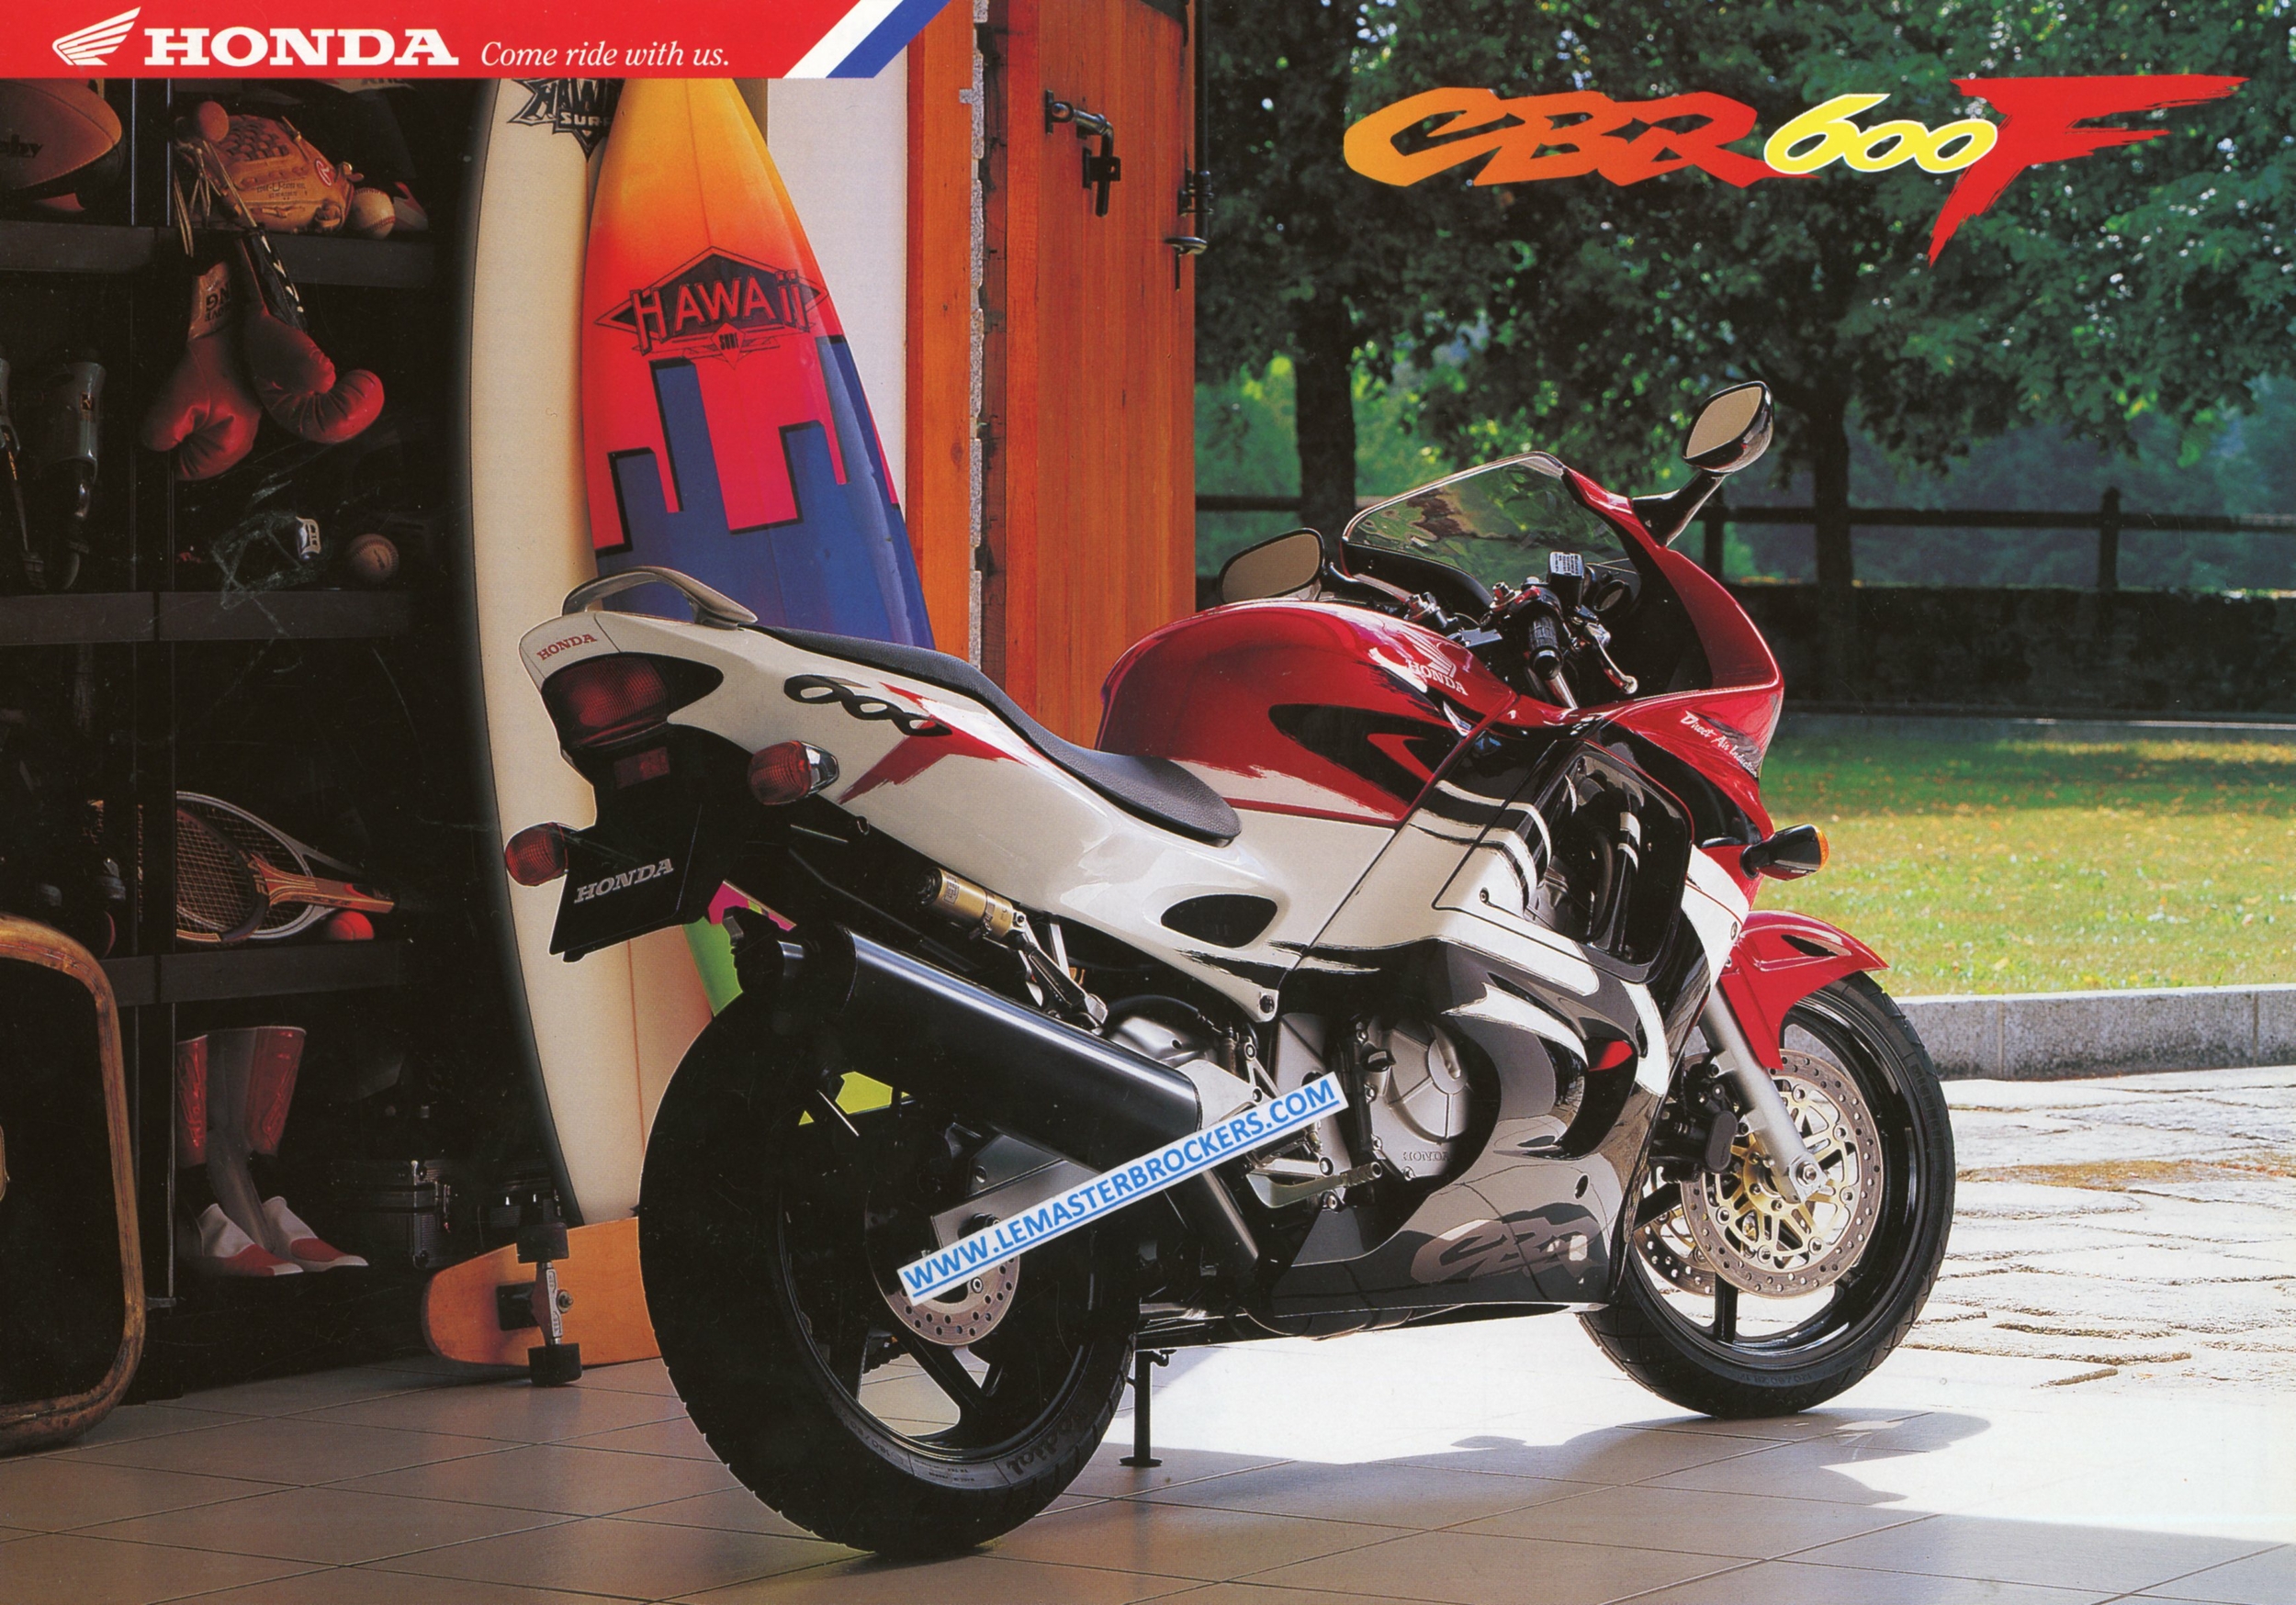 PROSPECTUS-MOTO-HONDA-CBR-cbr600f-LEMASTERBROCKERS-1996-BROCHURE-MOTO